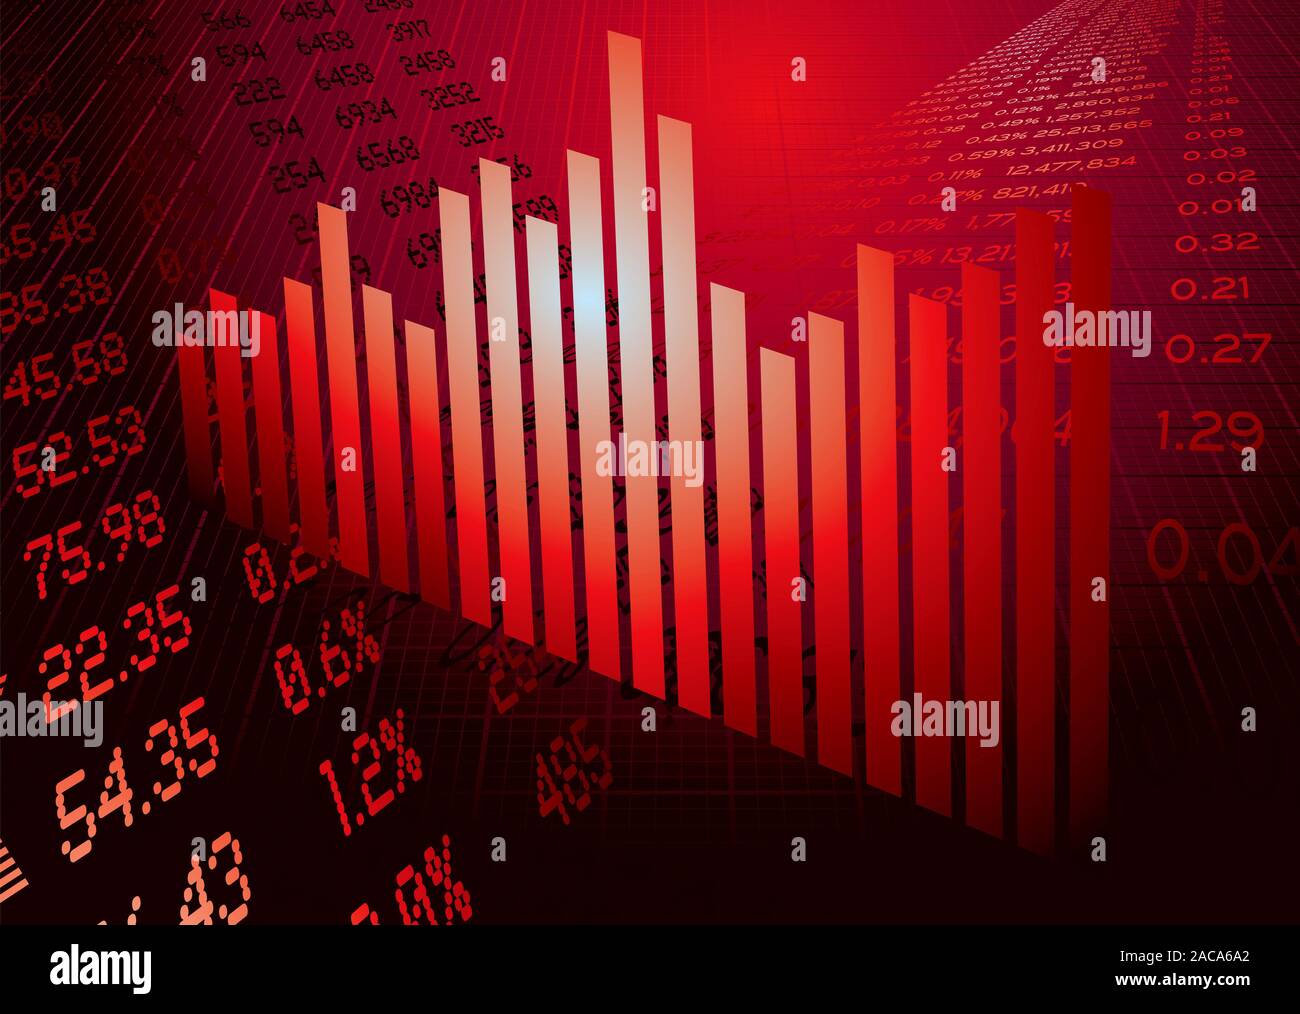 Finanzielle Kennzahlen Diagramm rot Stockfoto